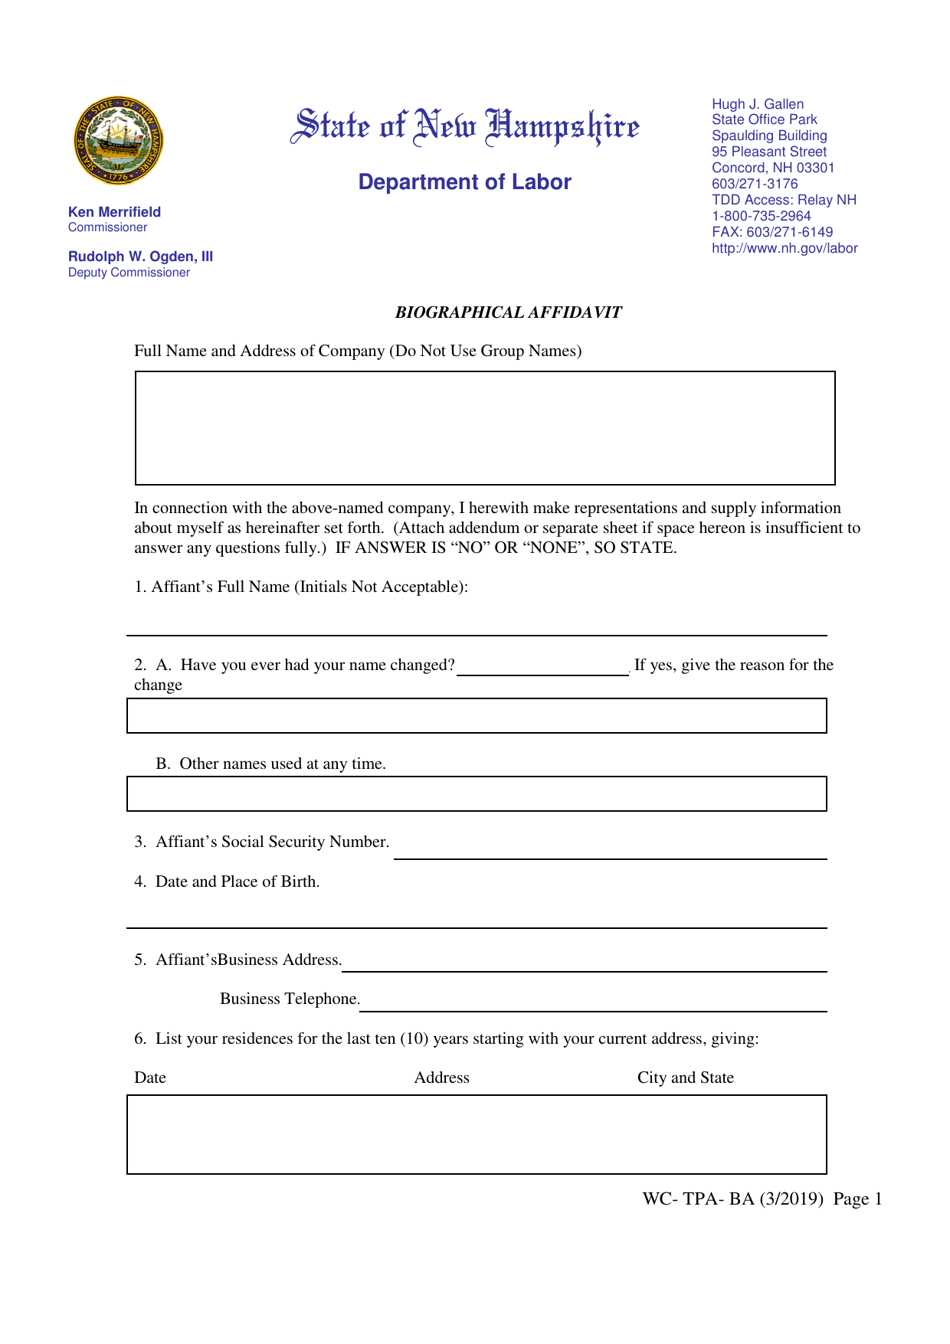 Form WC-TPA-BA Biographical Affidavit - New Hampshire, Page 1